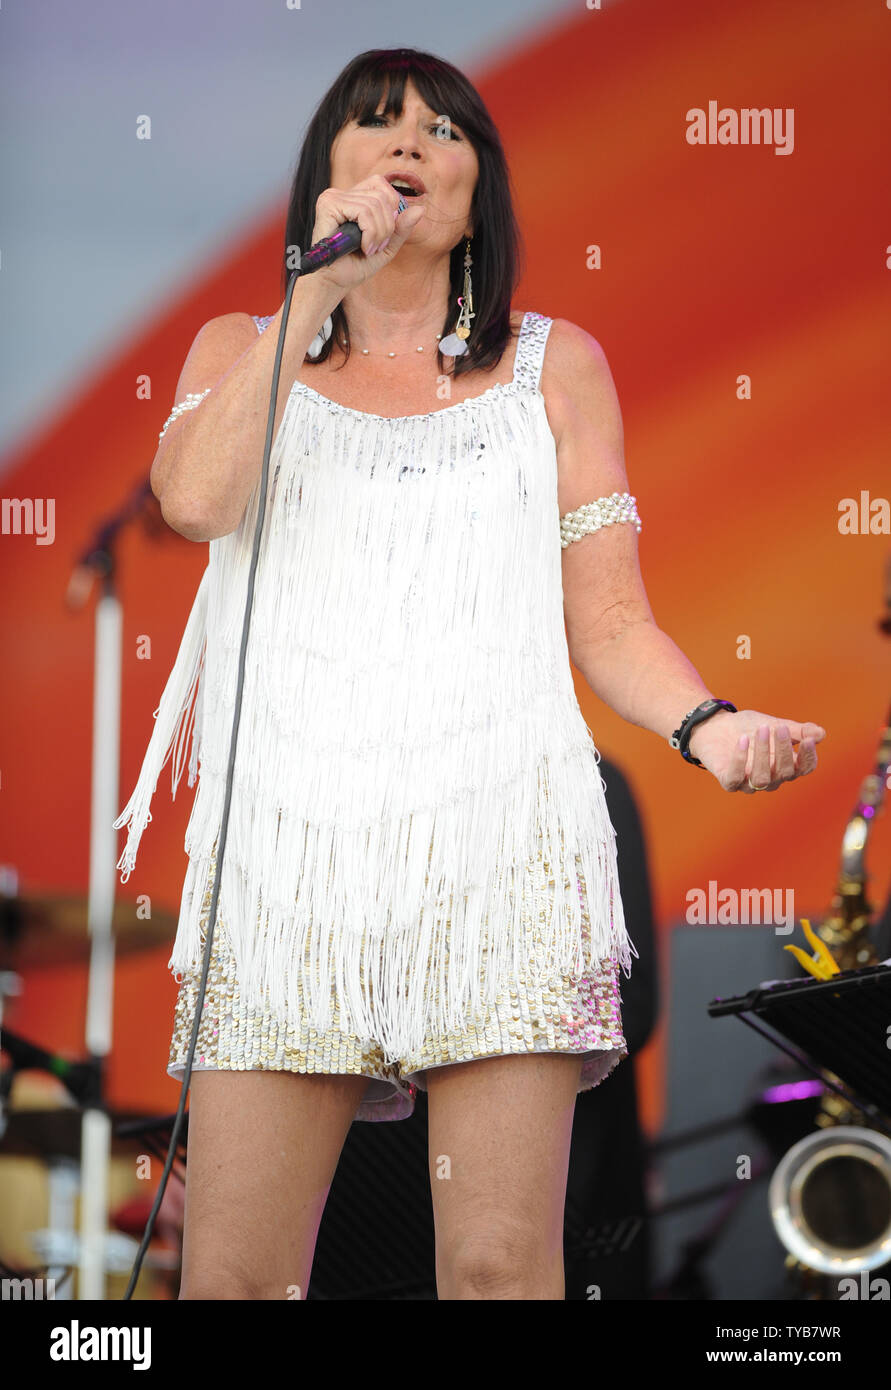 British singer Sandie Shaw perfoms at 'Radio 2 Live In Hyde Park'  in London on September 11, 2011.     UPI/Rune Hellestad Stock Photo